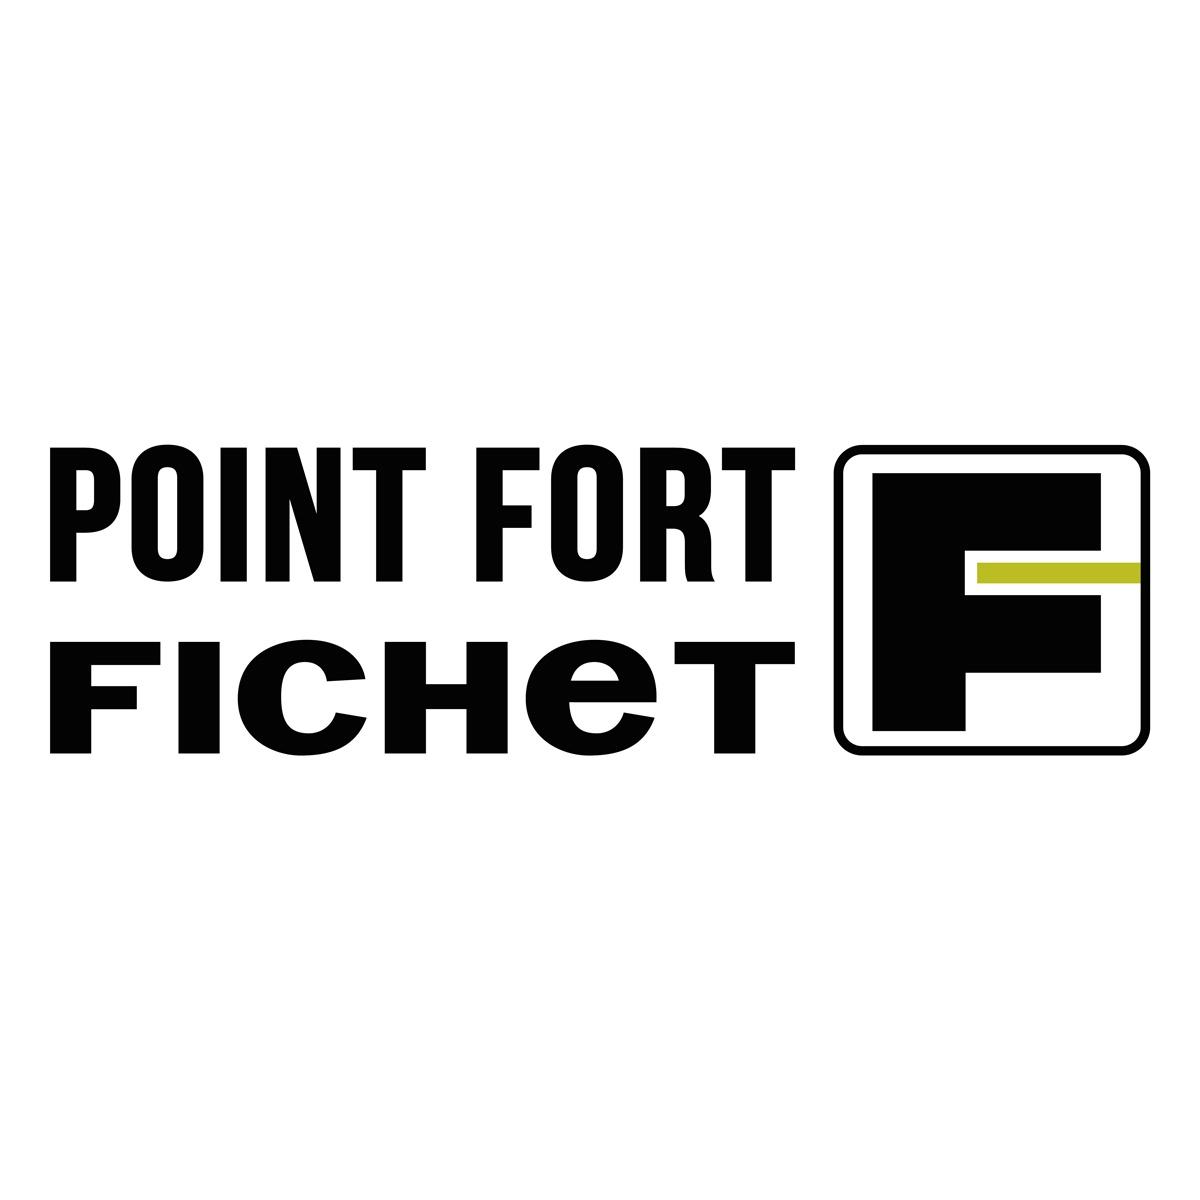 Serrurerie P.chretien - Point Fort Fichet  Arras